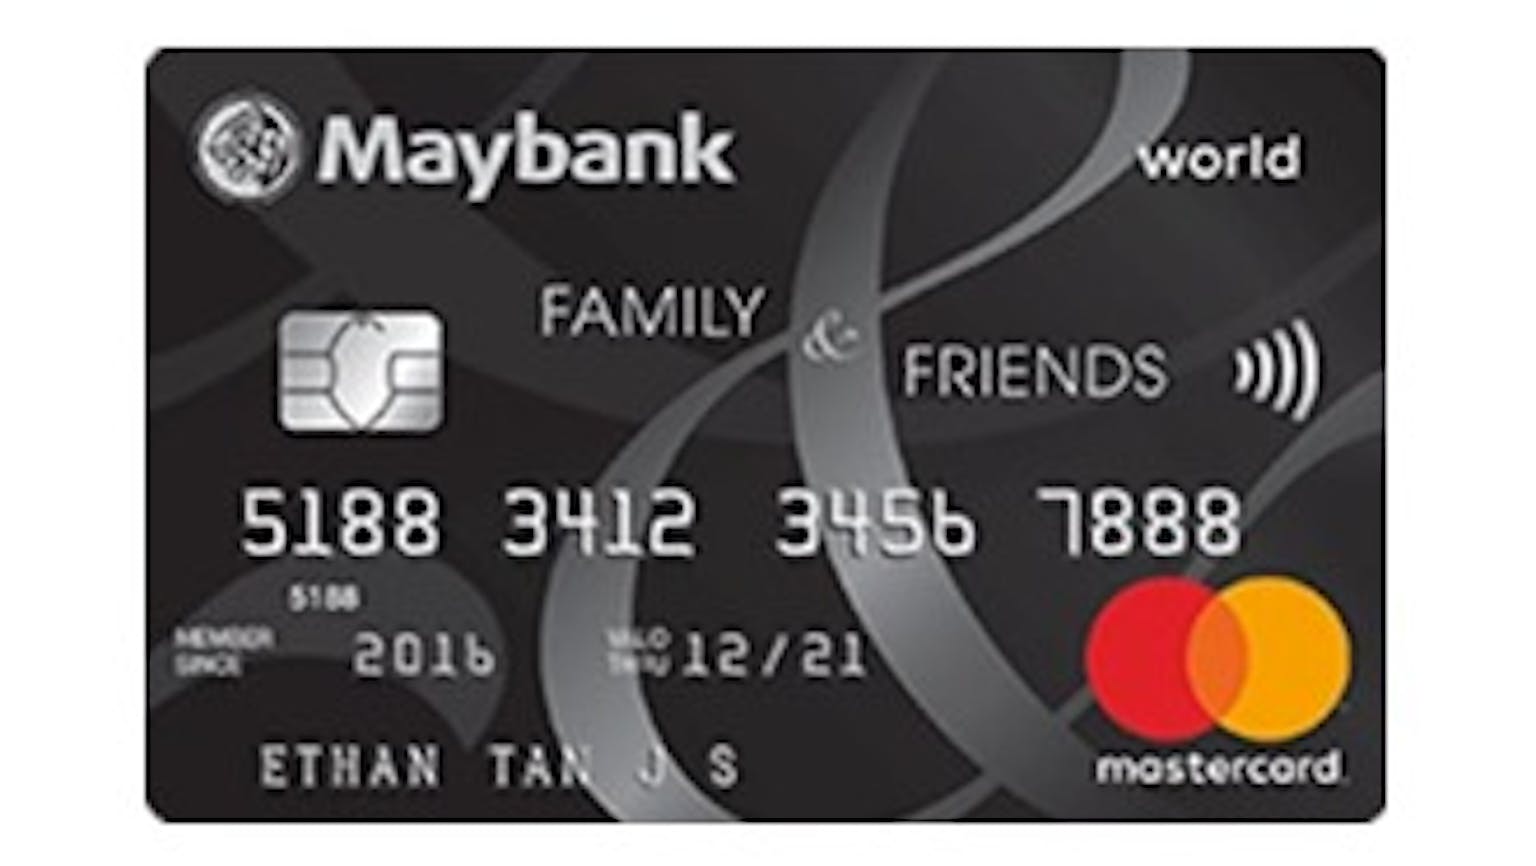 Maybank Family & Friends Card